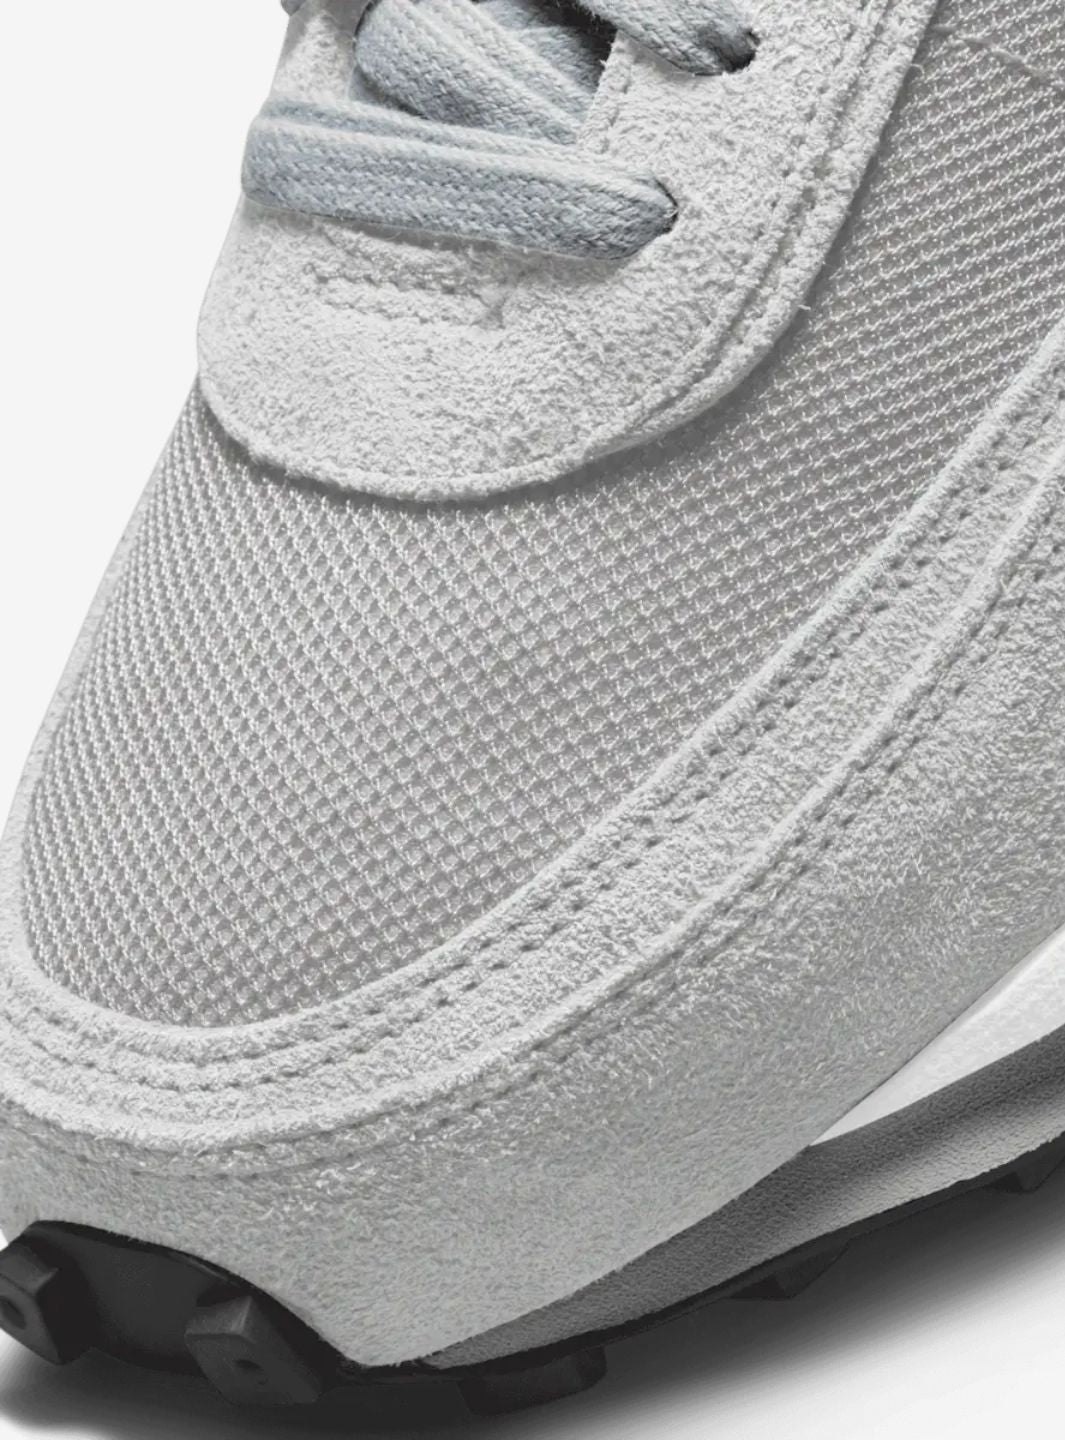 Nike LD Waffle SF Sacai Fragment Grey - DH2684-001 | ResellZone